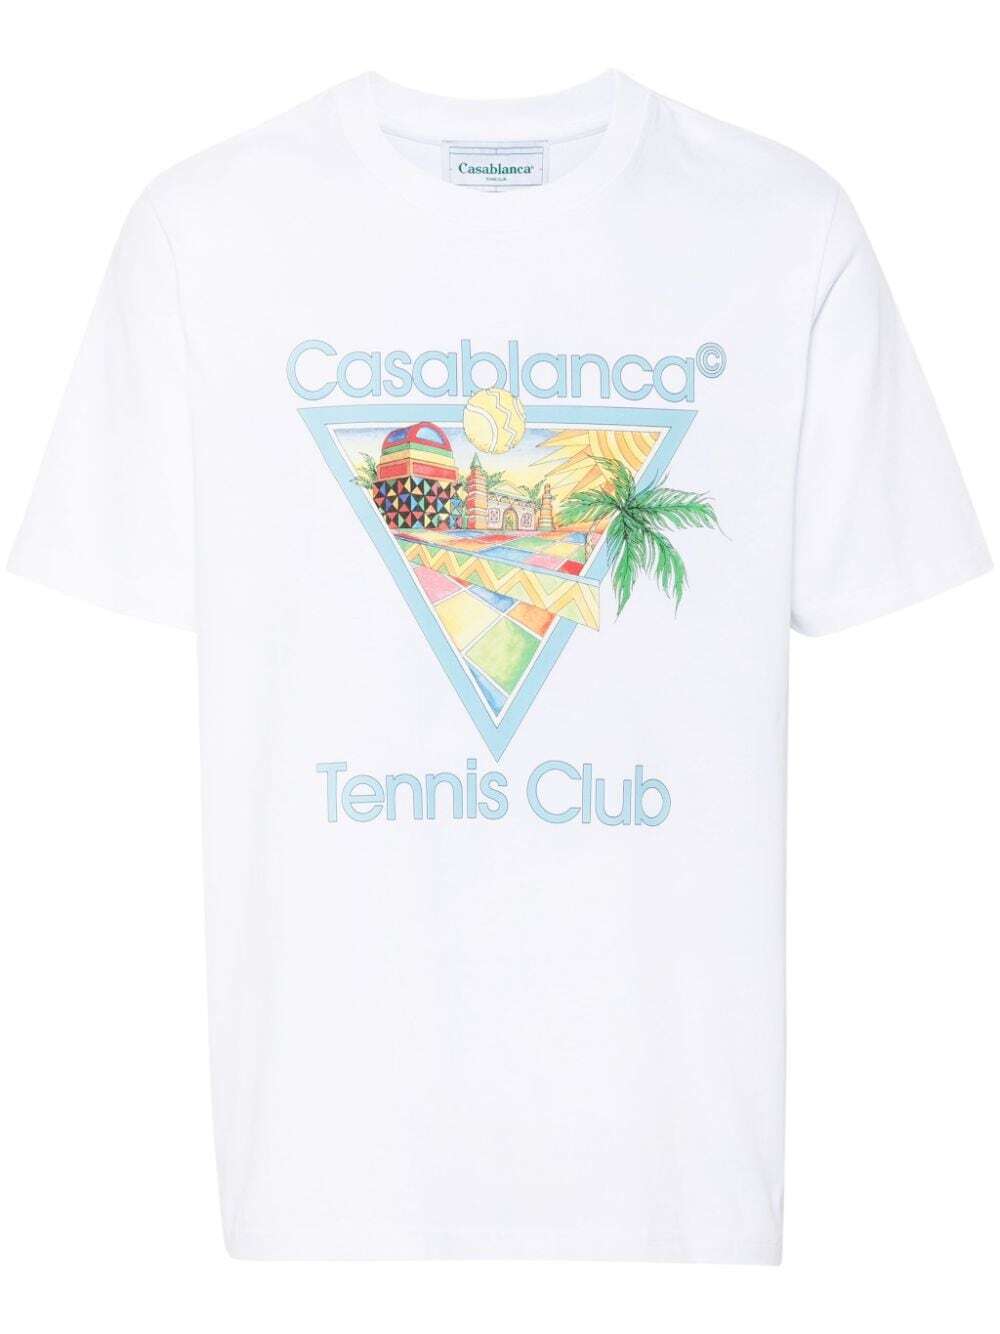 Afro Cubism Tennis Club T-Shirt